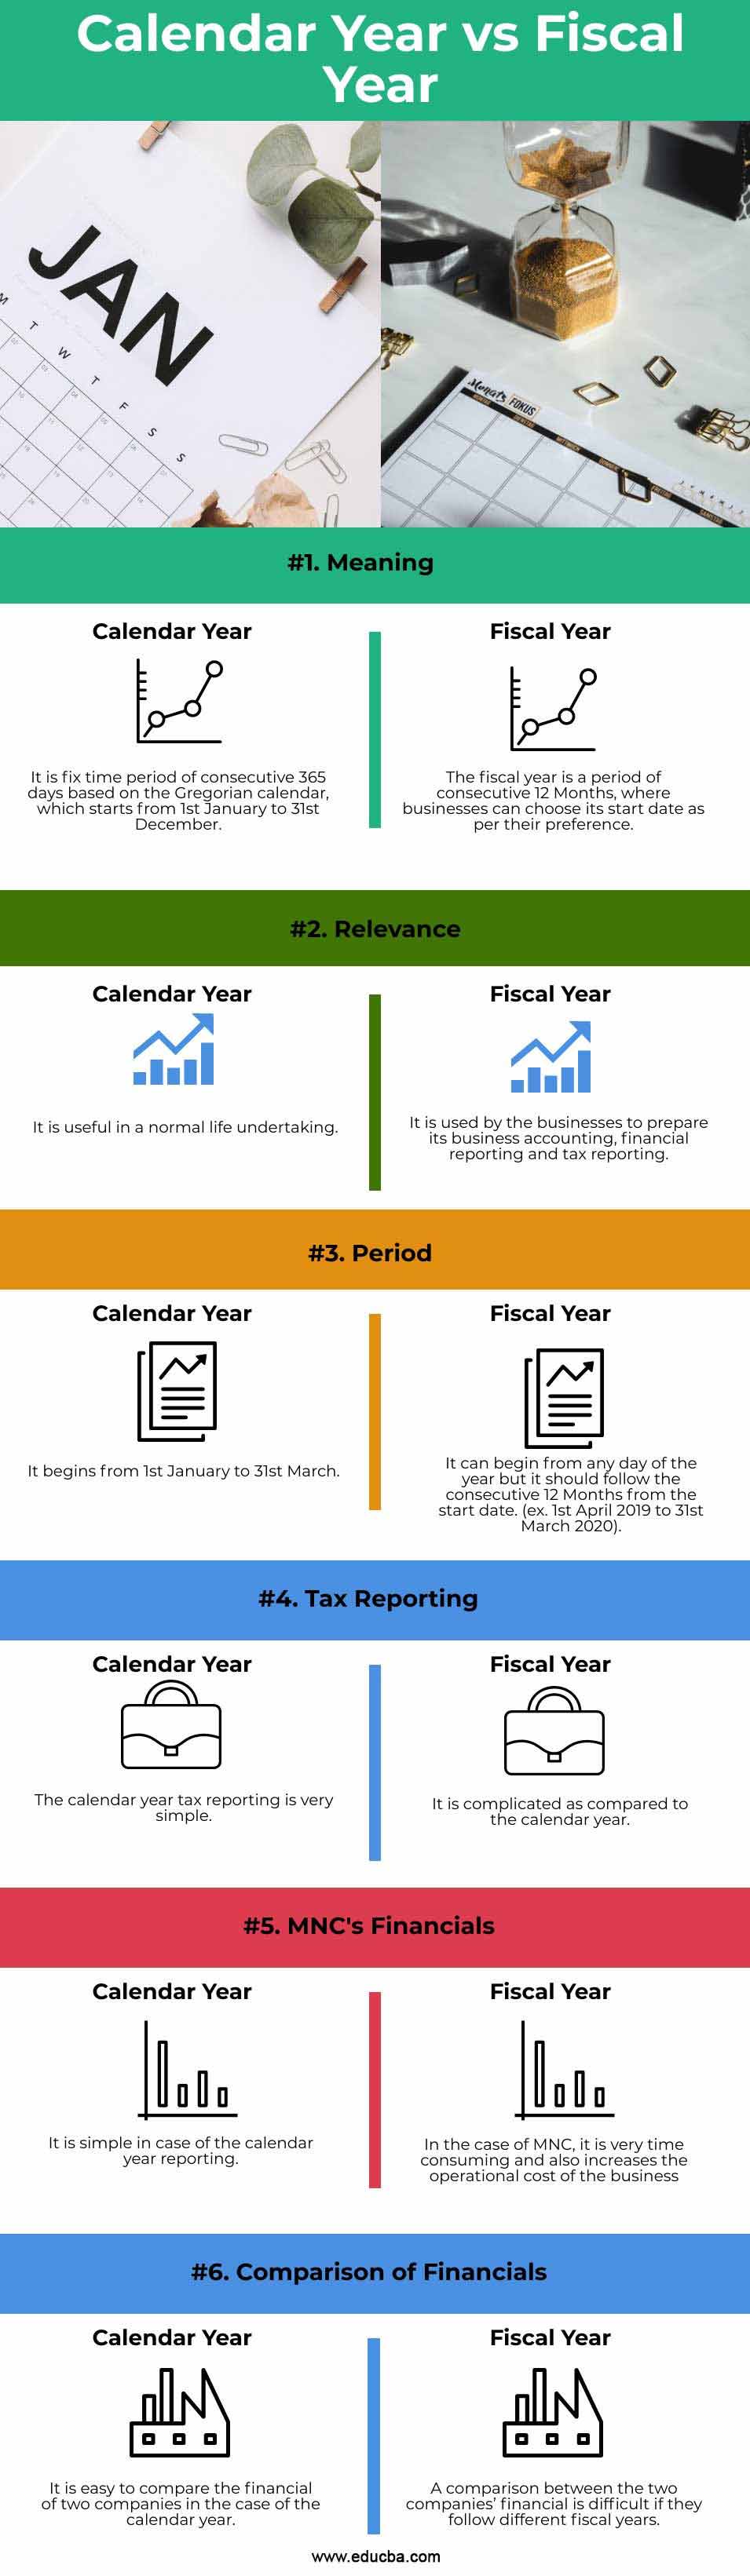 Calendar-Year-vs-Fiscal-Year-info